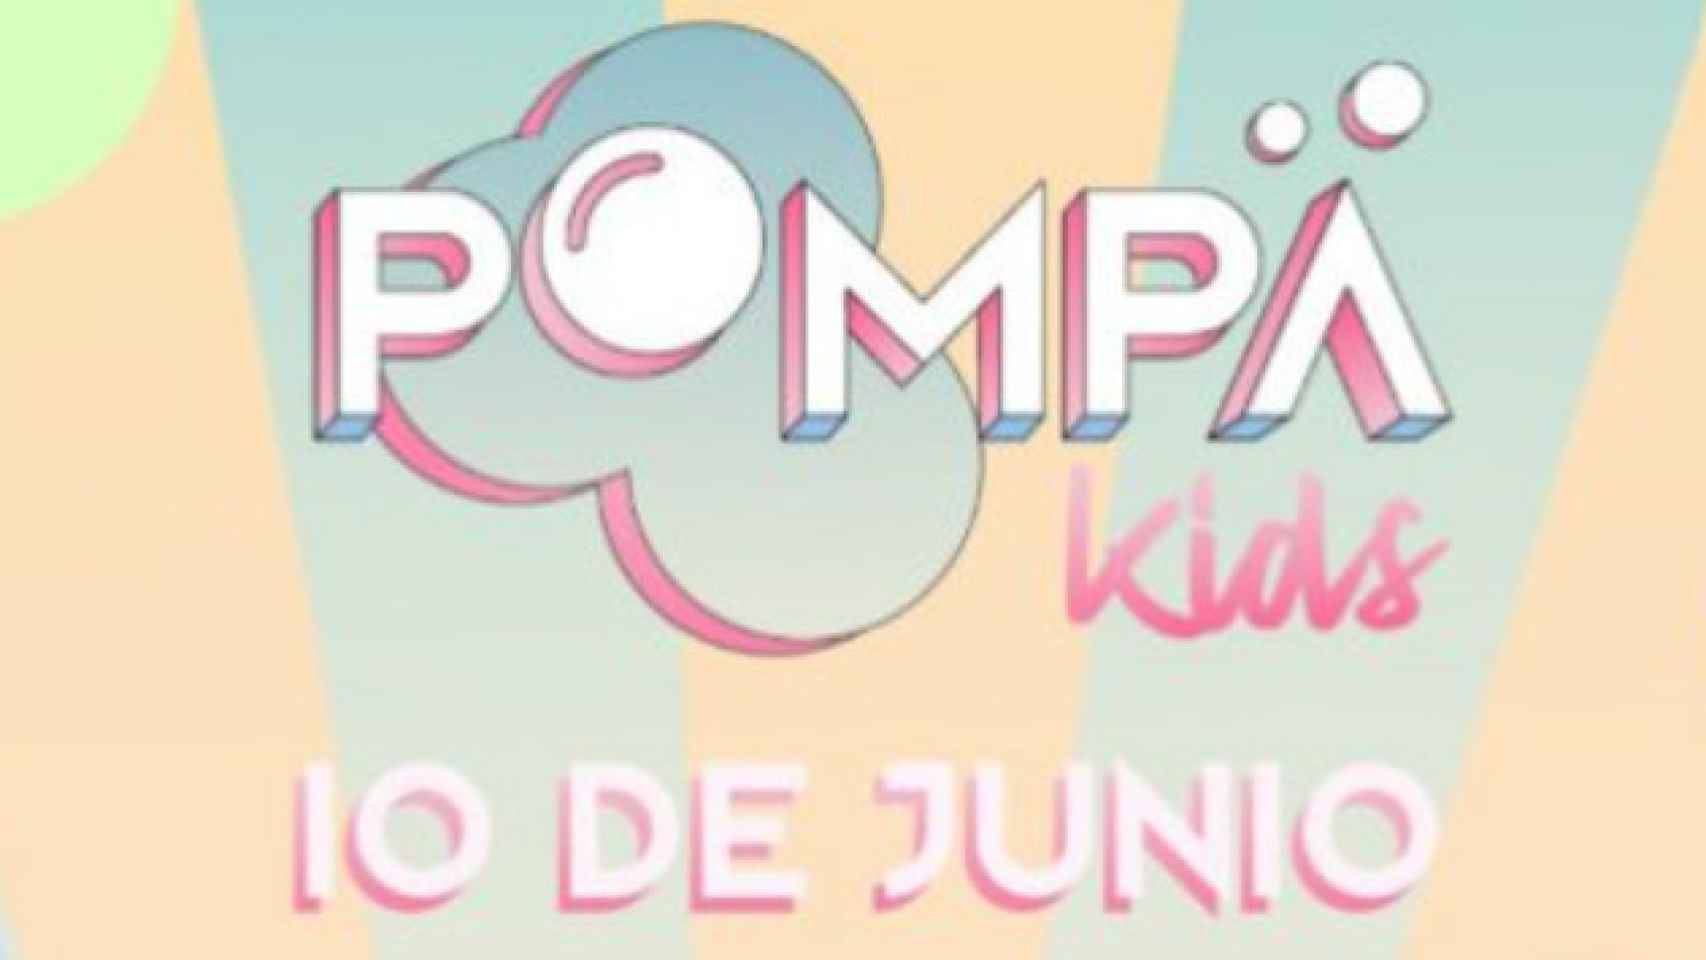 El cartel de Pompa Kids